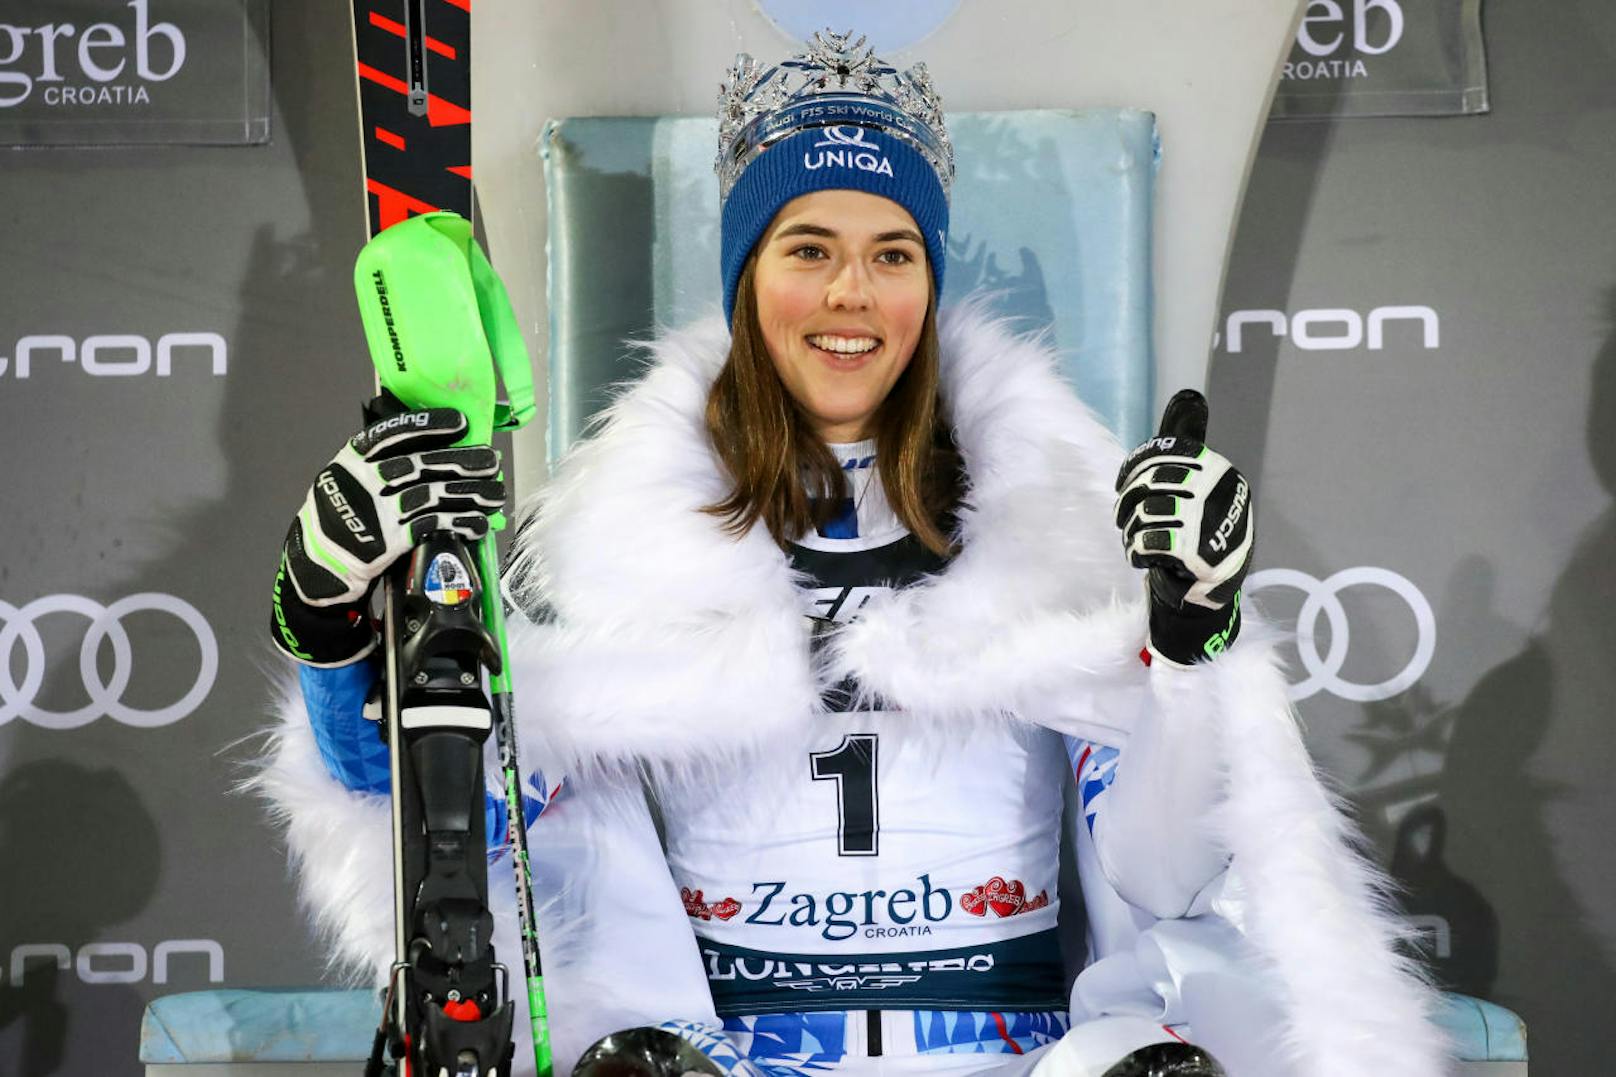 Petra Vlhova (Slowakei) kürte sich im Slalom von Zagreb souverän zur Kristall-Königin. 1,31 Sekunden verlor Mikaela Shiffrin (USA). Katharina Liensberger lag als Dritte bereits 3,49 Sekunden hinten.